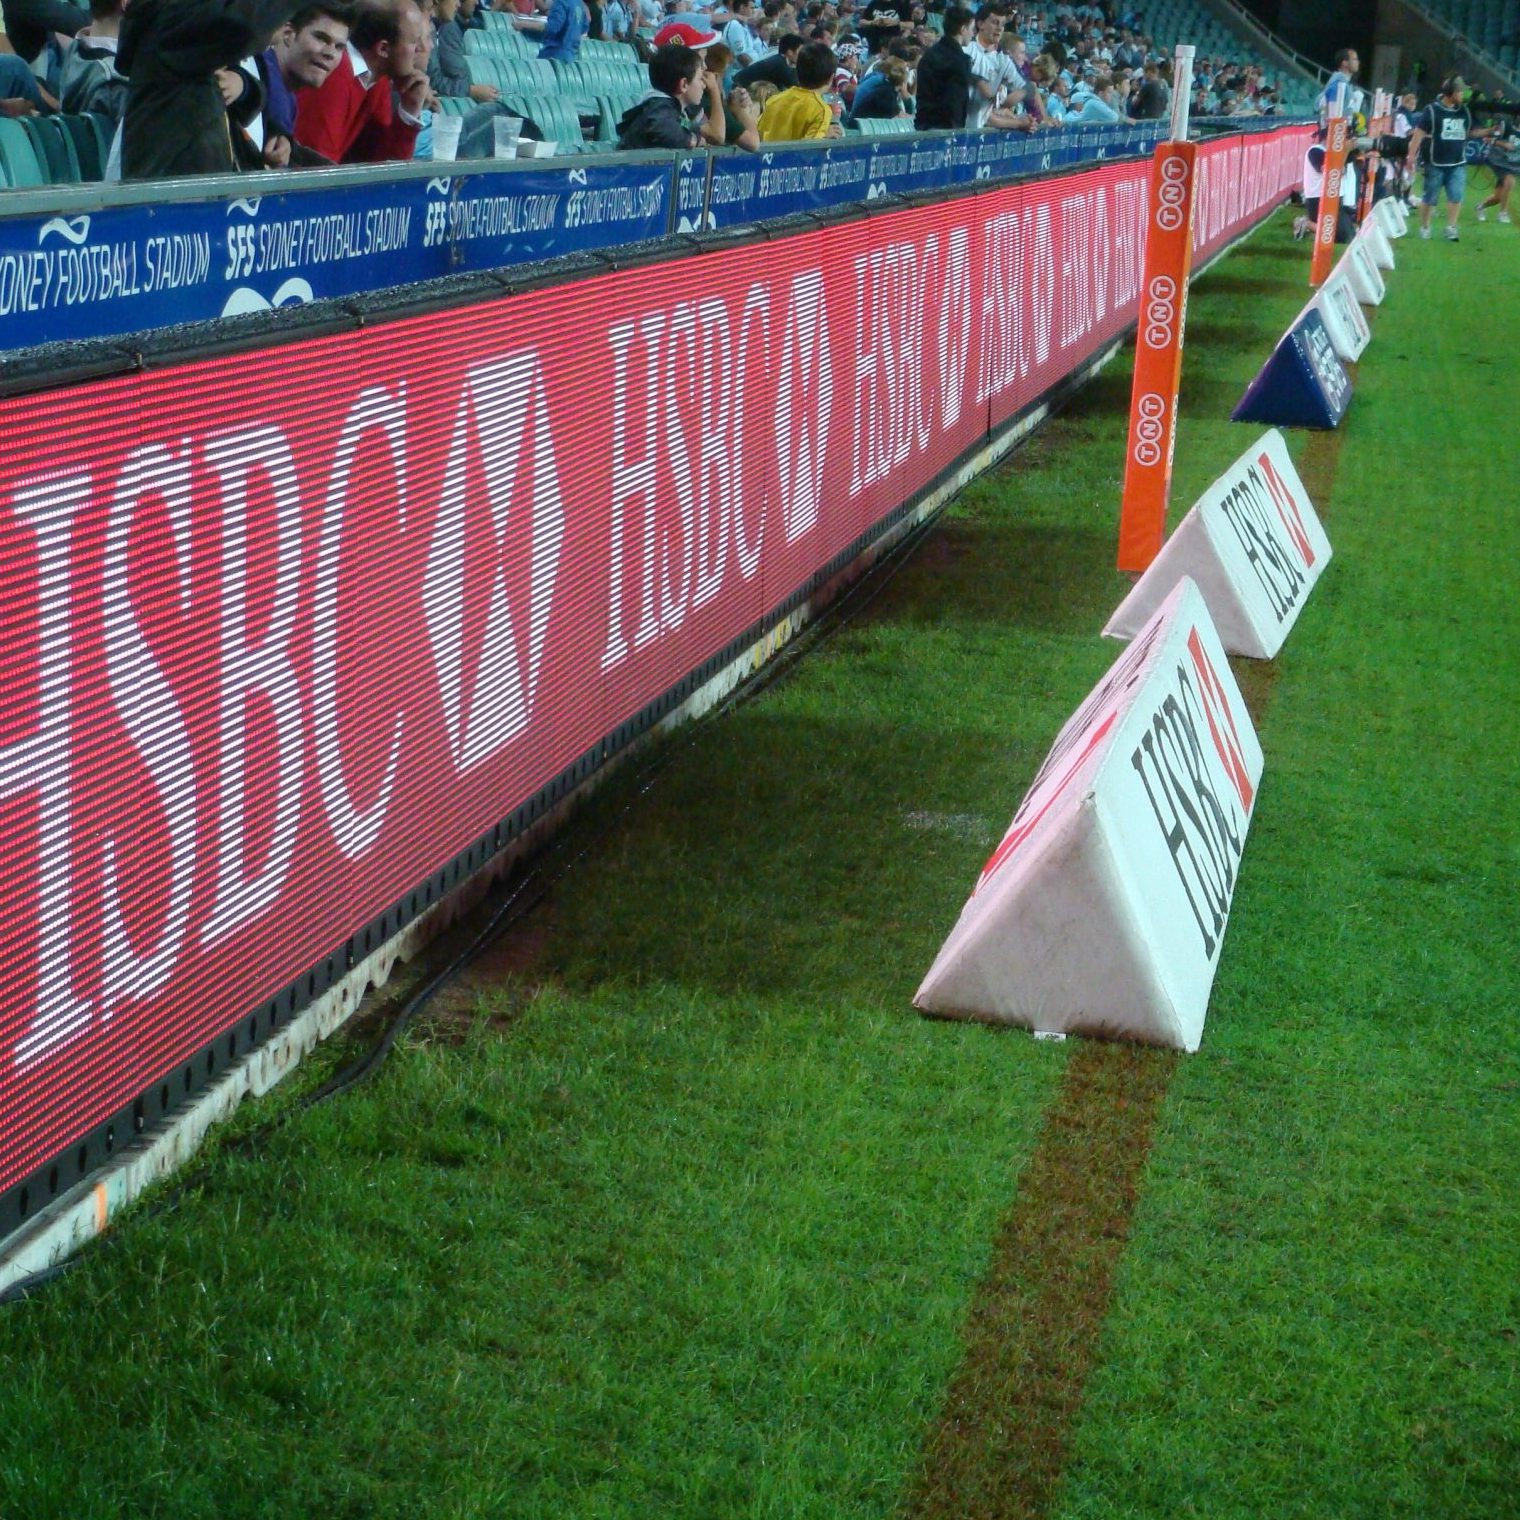 Image shows digital screen perimeter boards at a football match